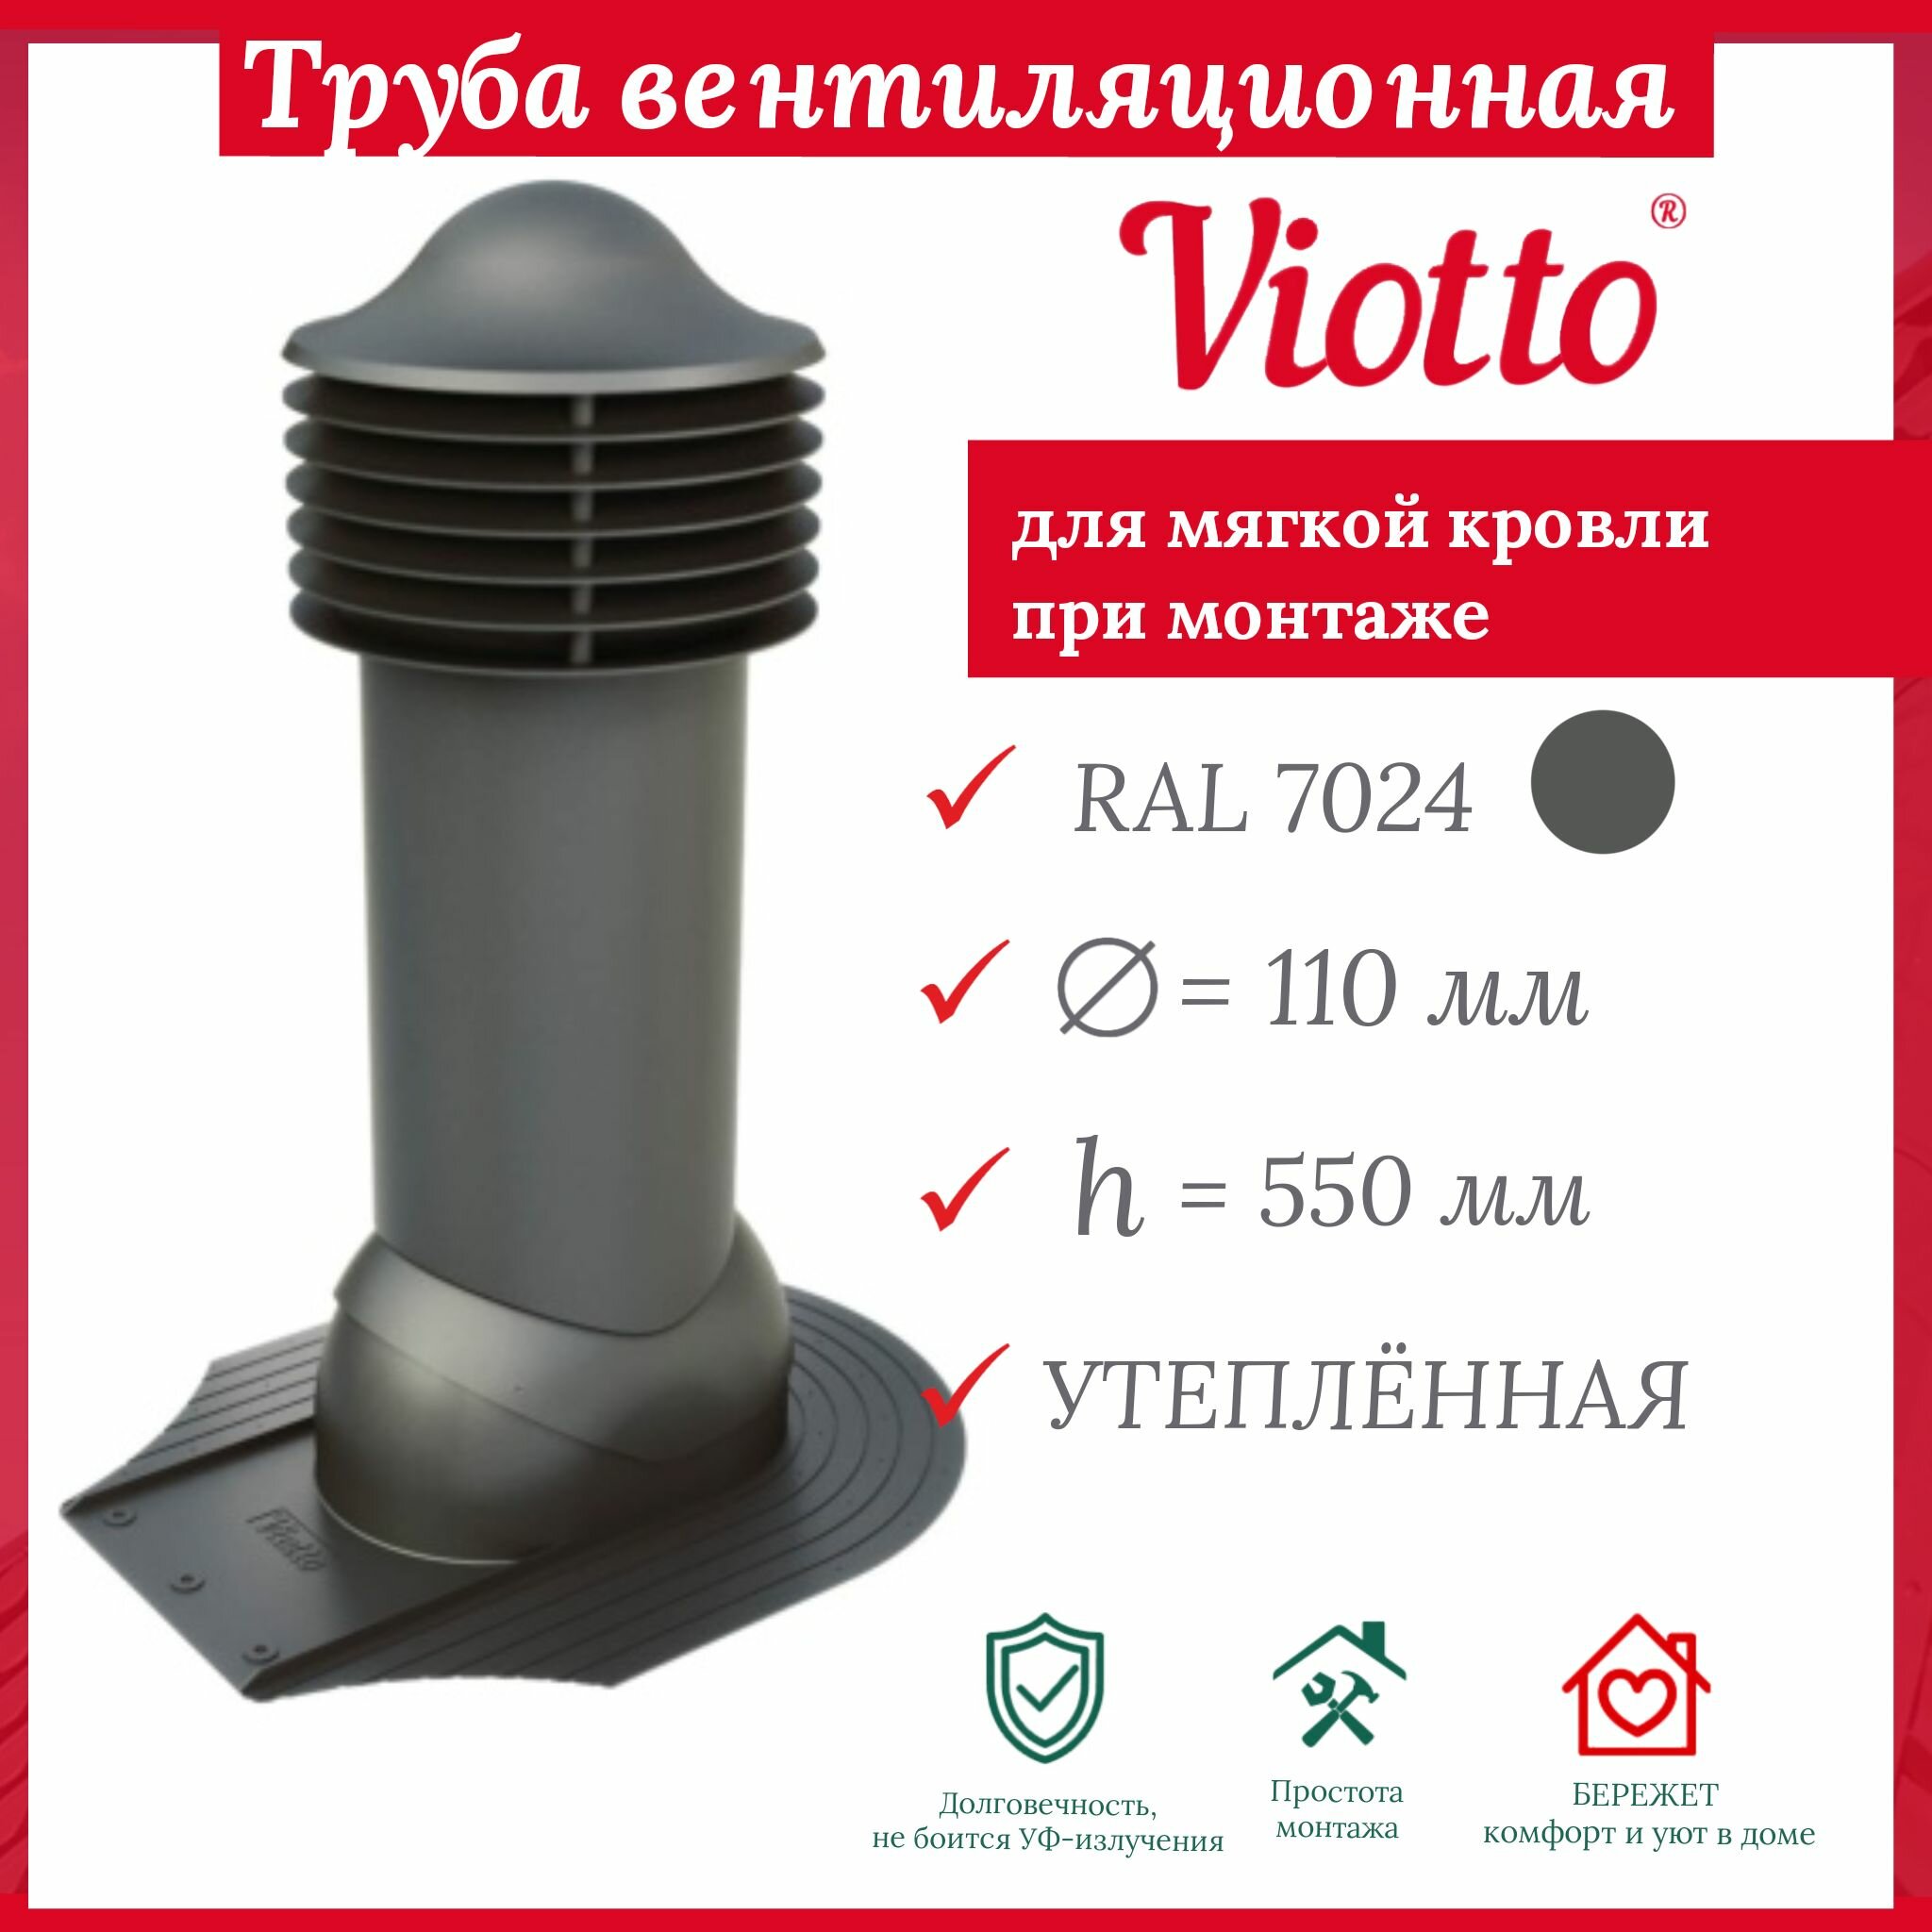 Труба вентиляционная утепленная, Viotto, 110/550 мм для мягкой кровли при монтаже, RAL 7024.